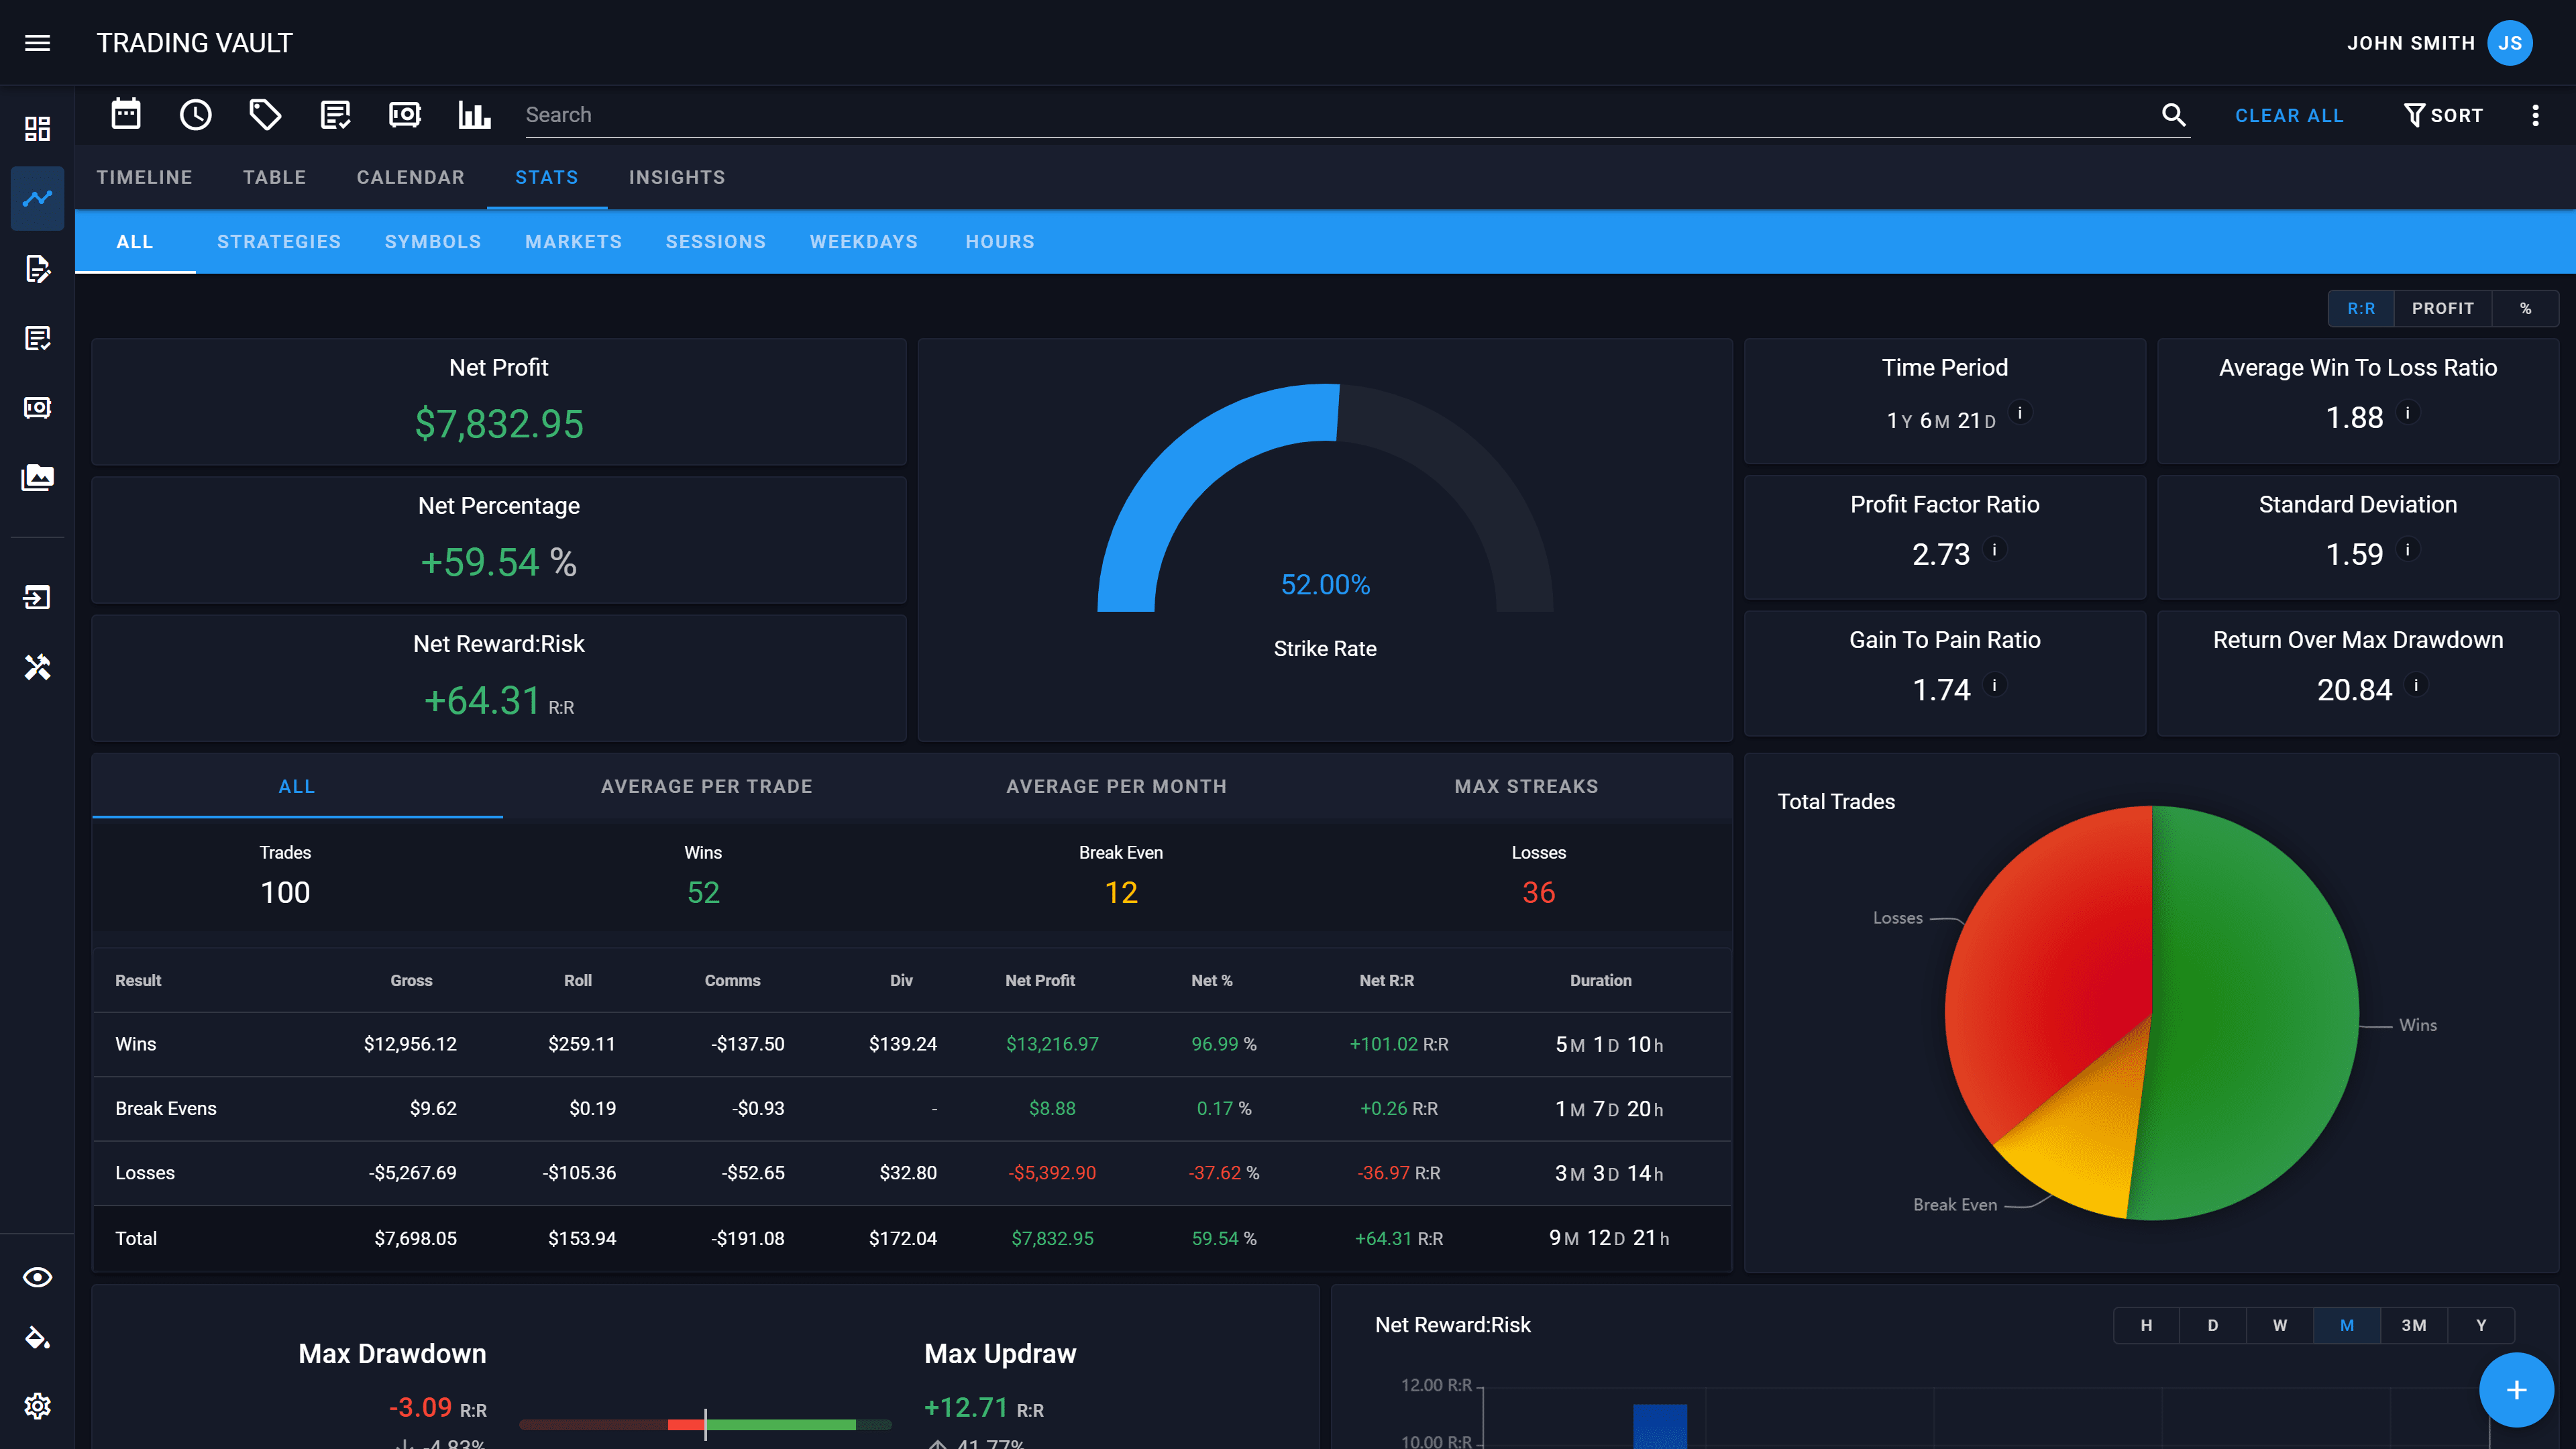 Trading Vault stats screen